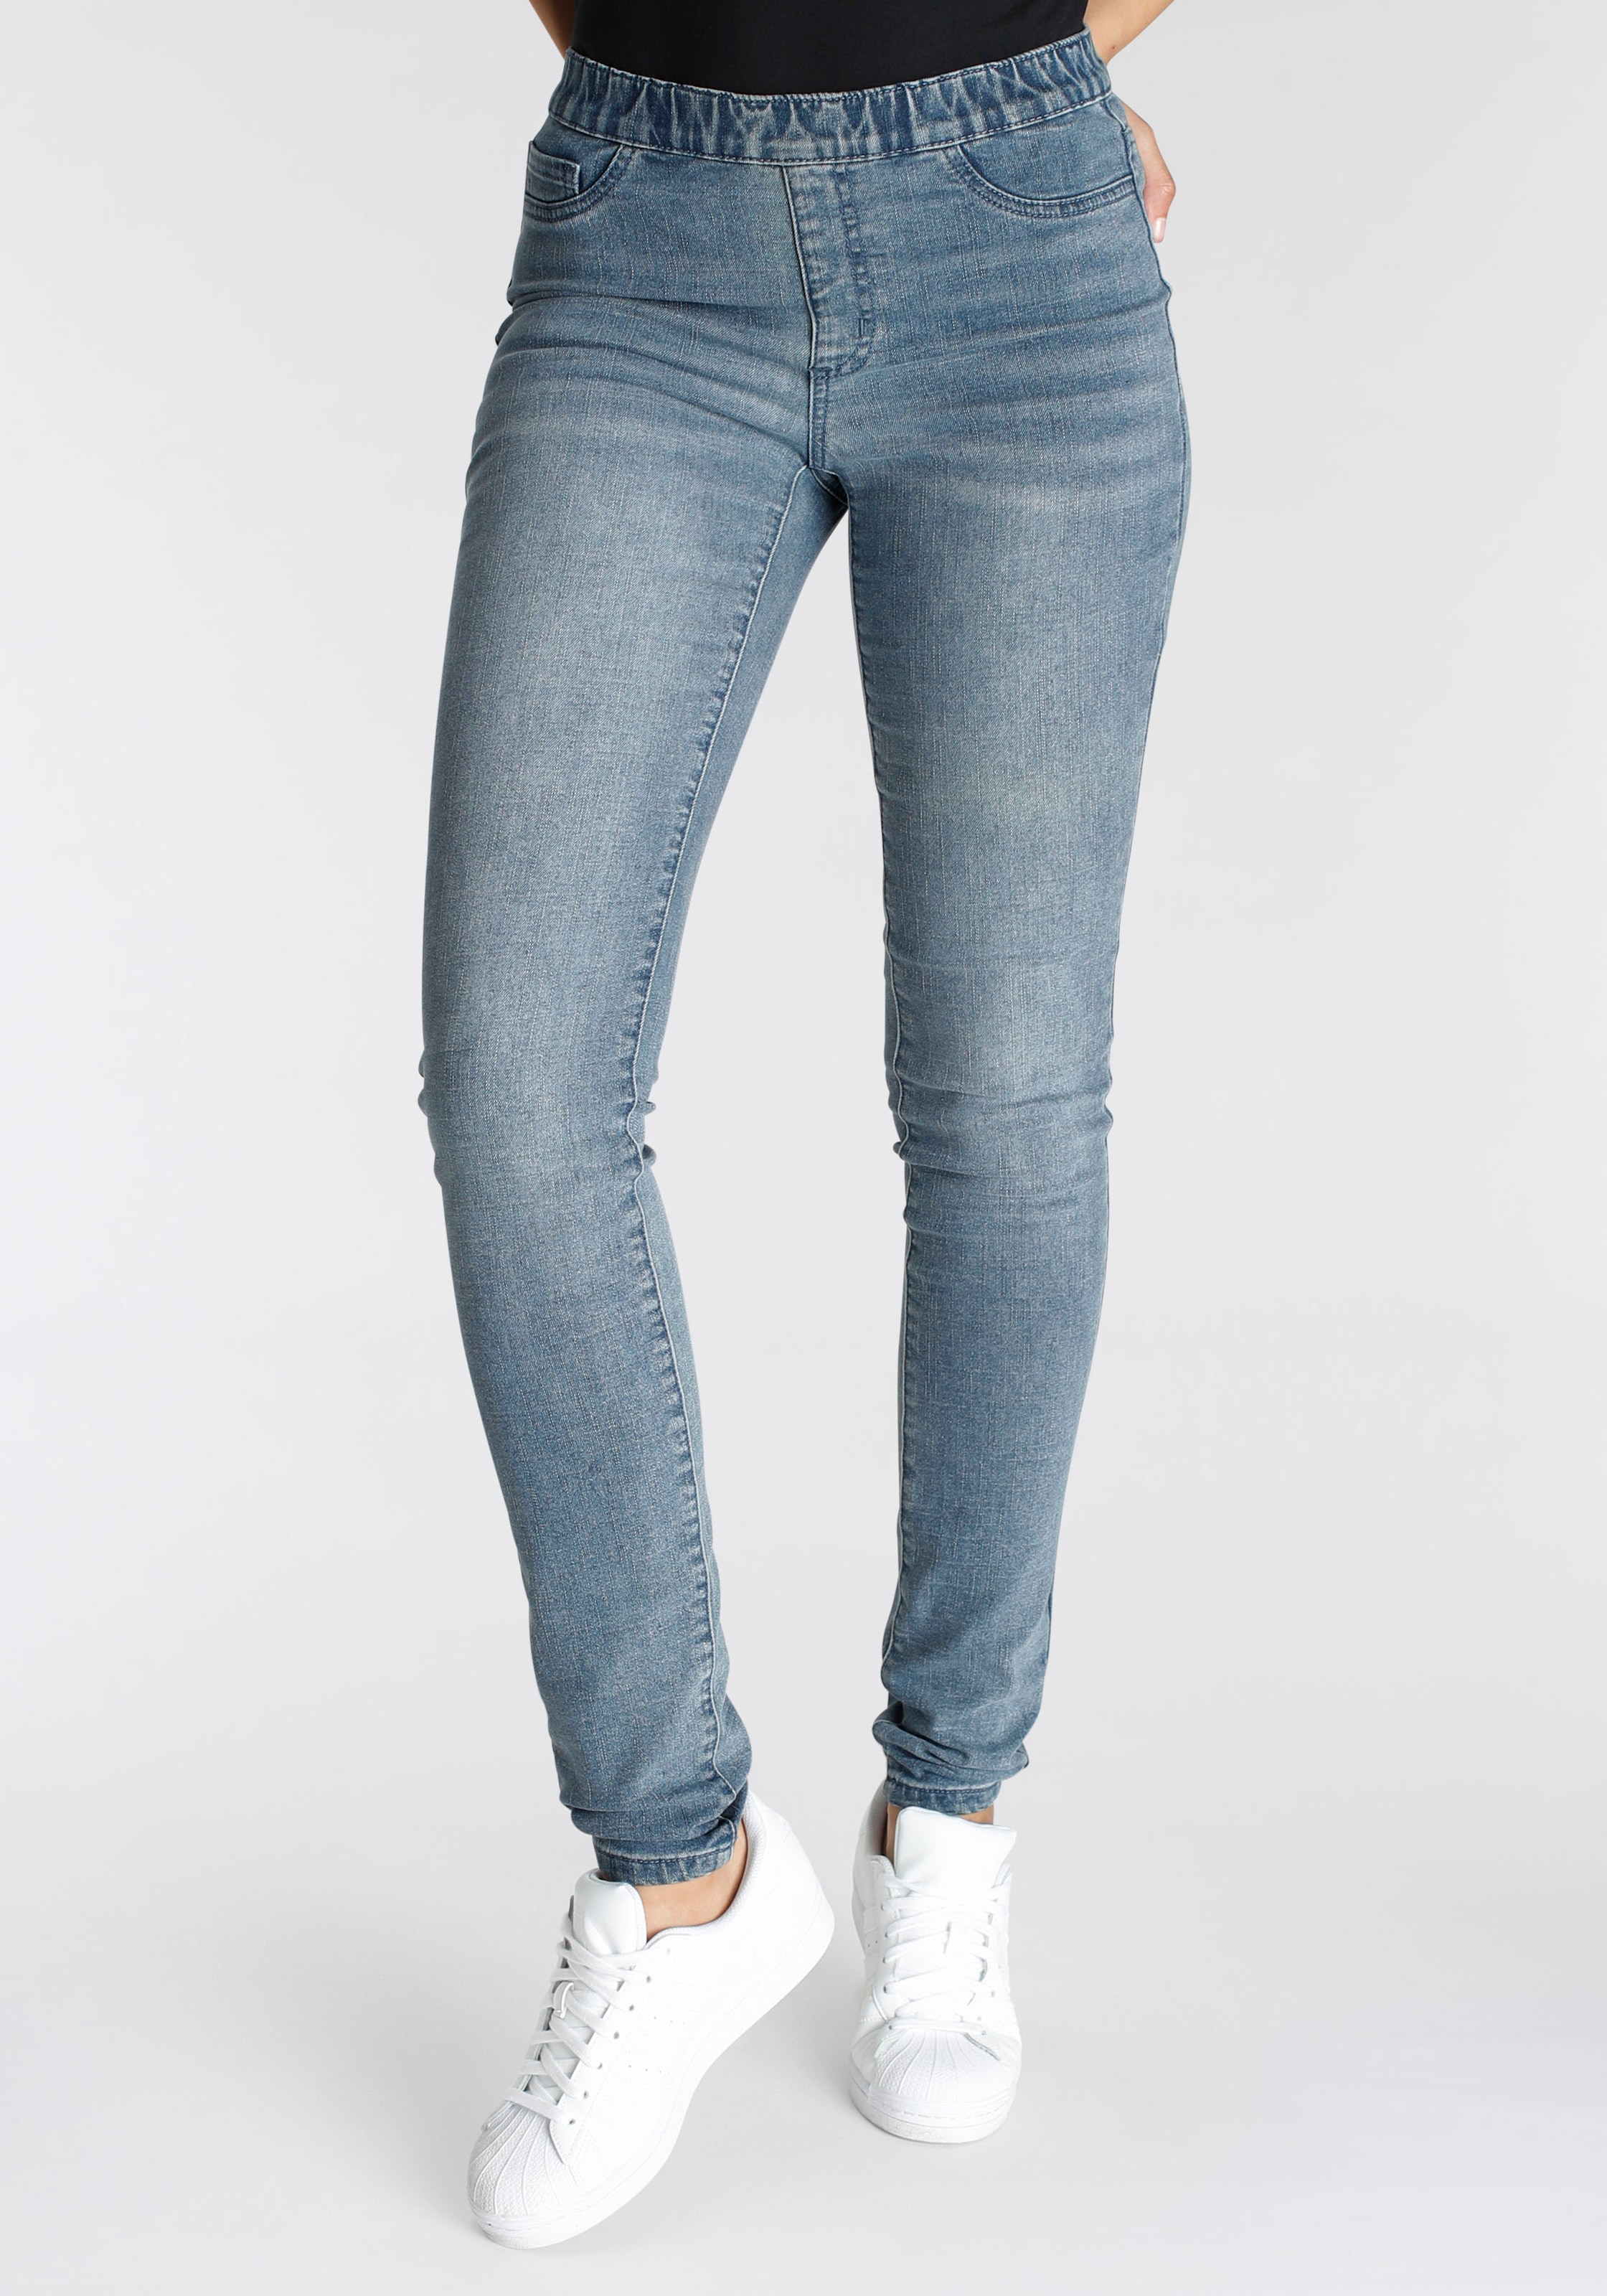 Arizona Jeans Damen bestellen ▻ online